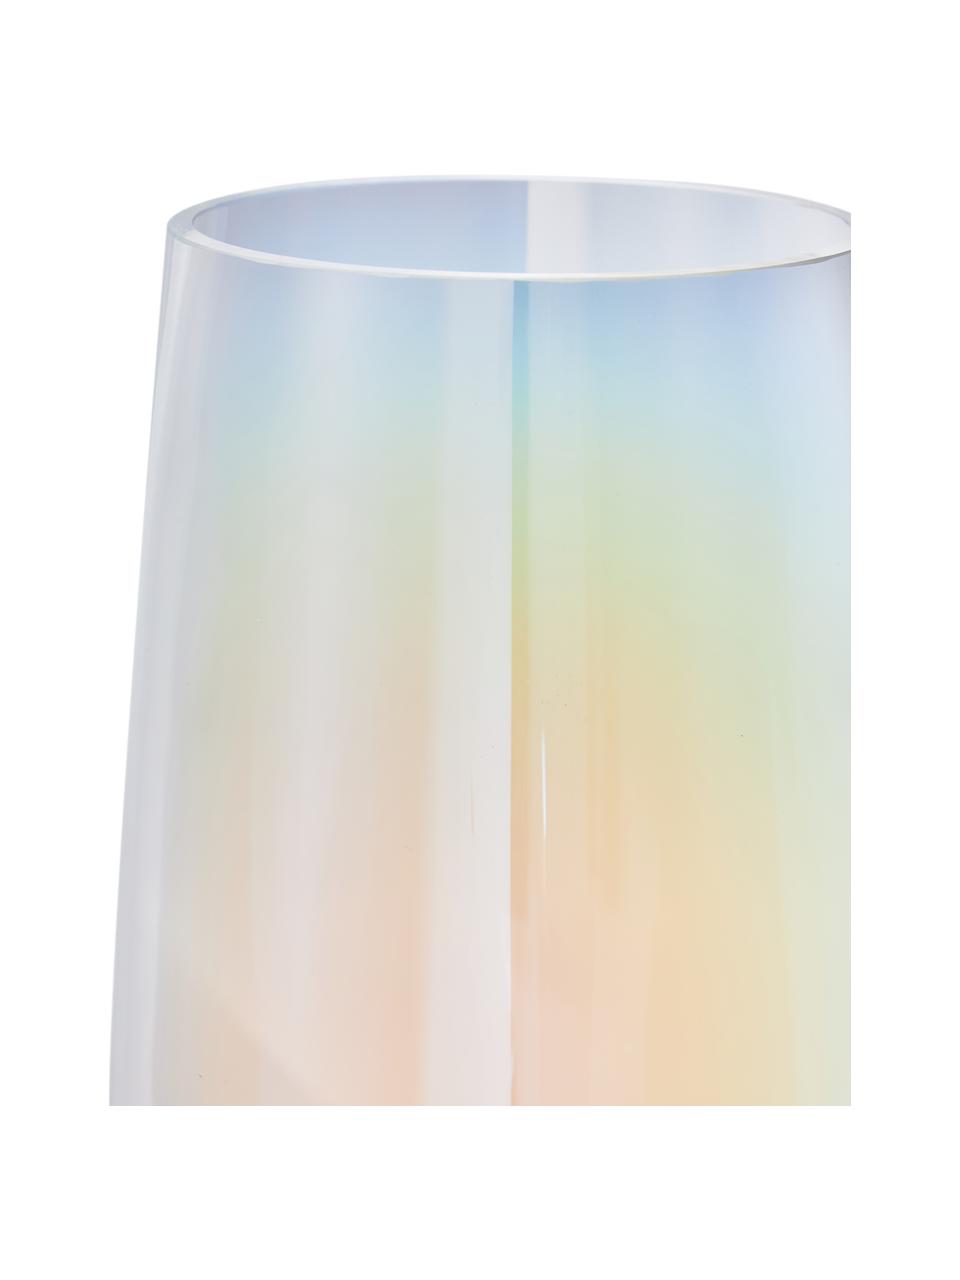 Jarrón de vidrio iridiscente soplado artesanalmente Myla, Vidrio, Transparente iridiscente, Ø 18 x Al 40 cm